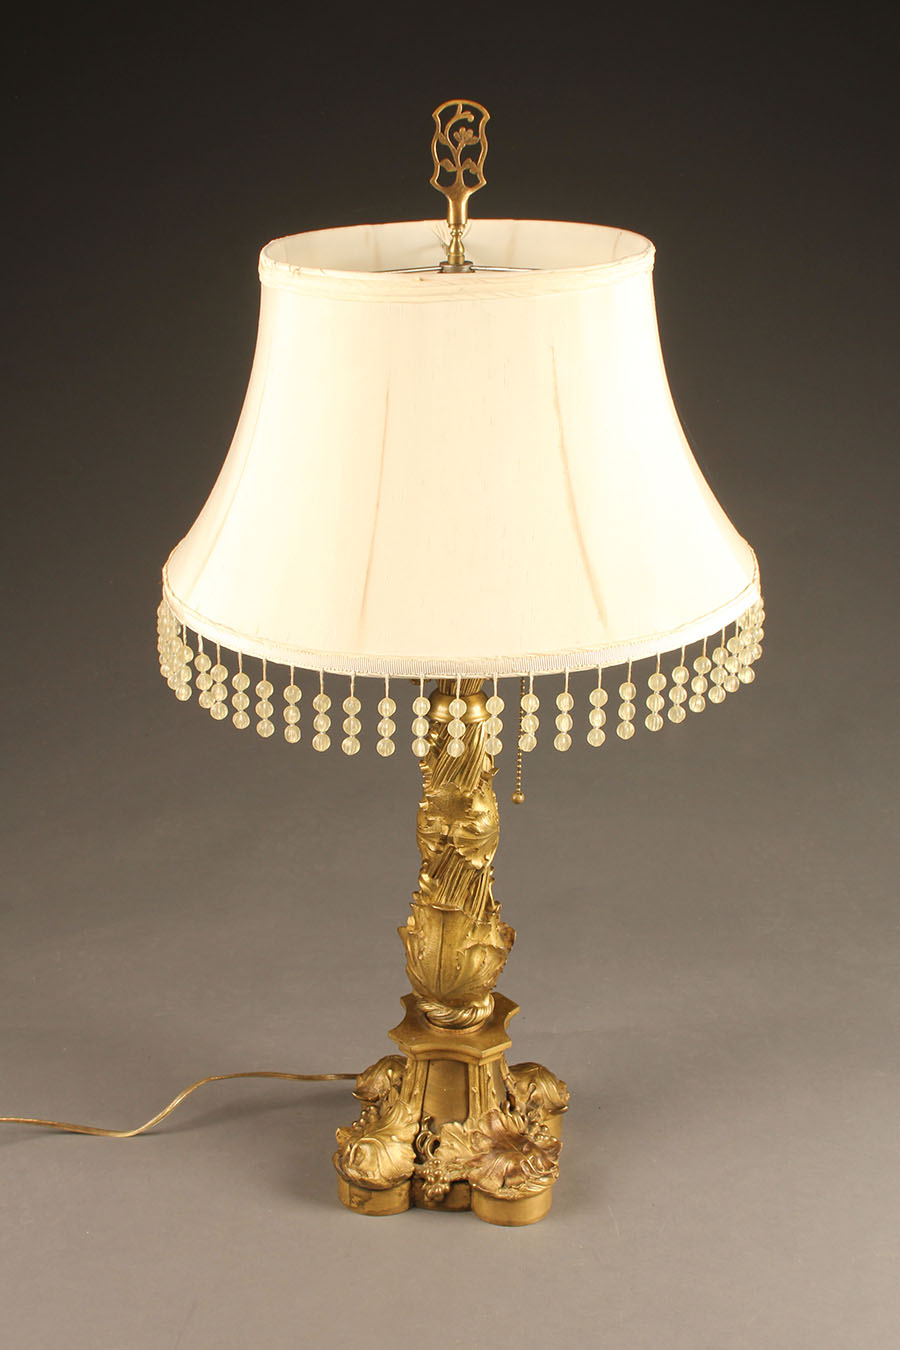 Asombro trabajo Aplaudir Antique French Louis XV style bronze lamp